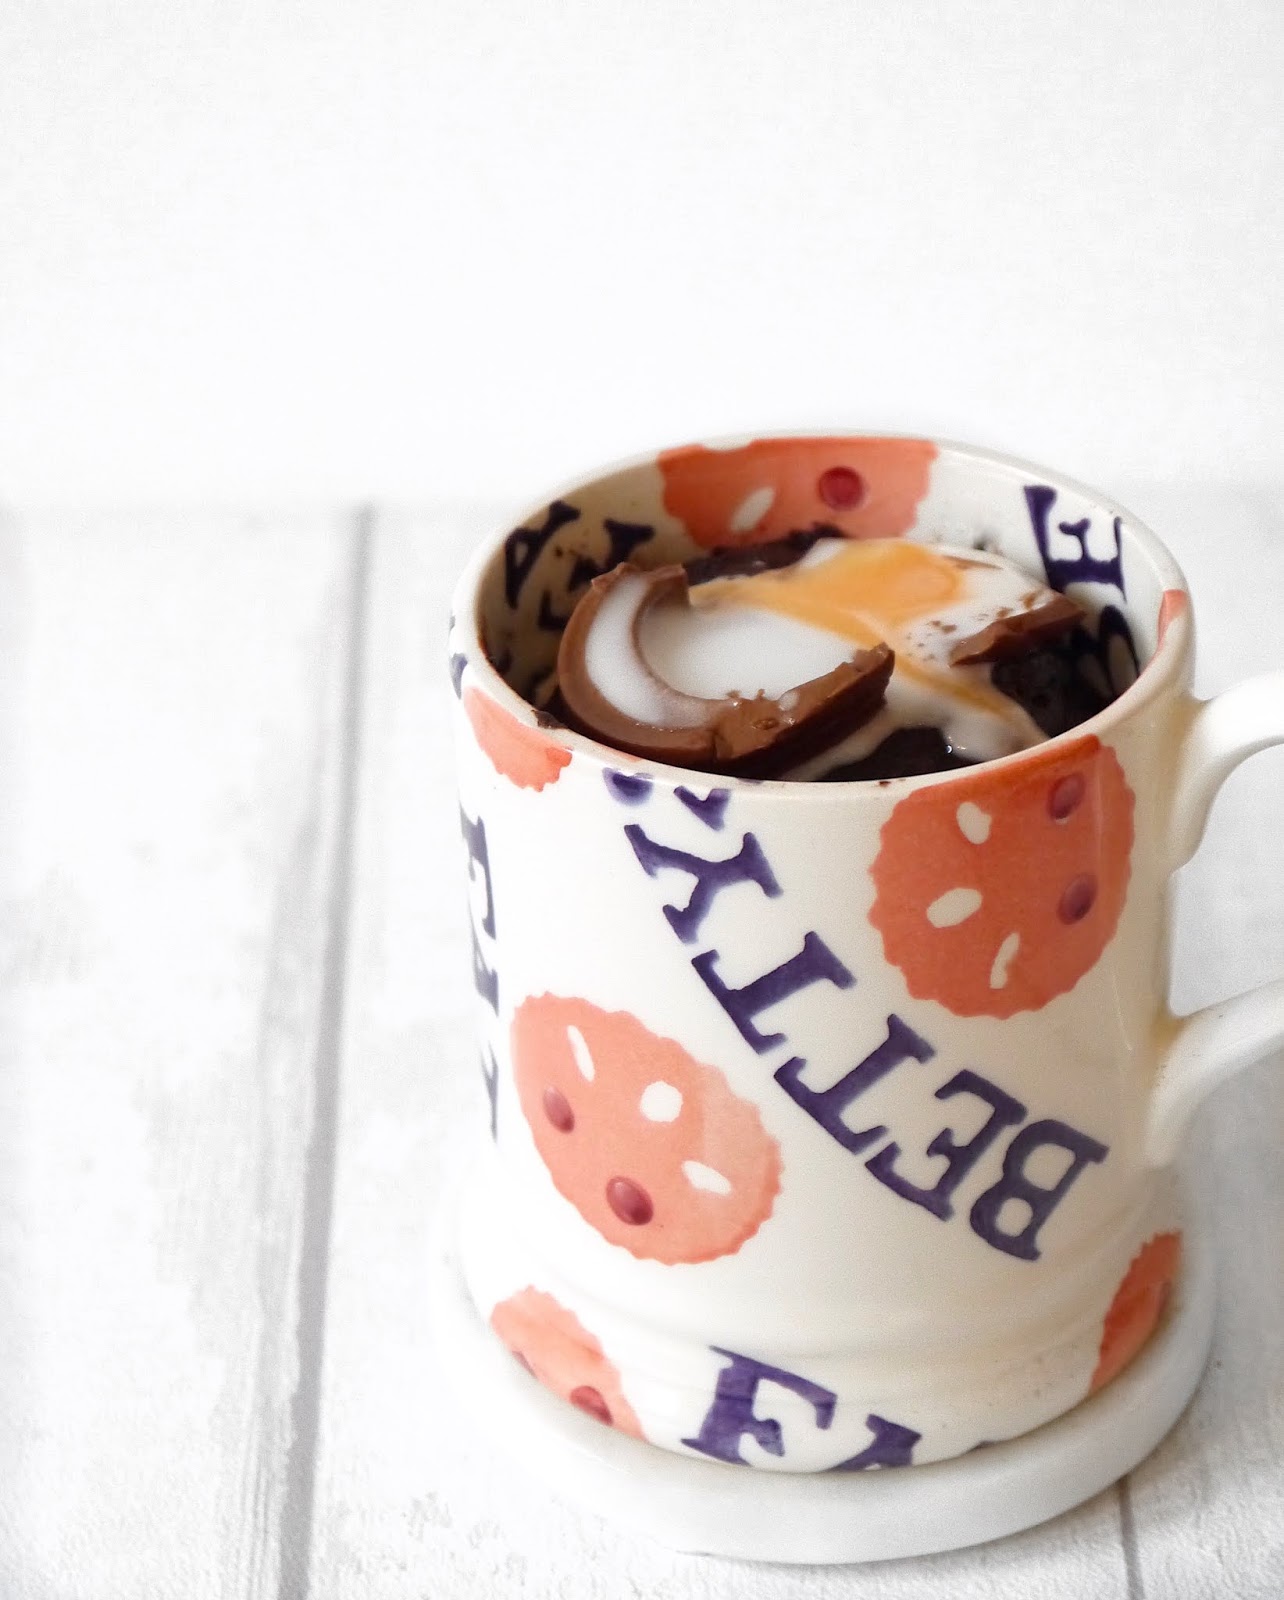 The Betty Stamp Creme Egg Easter Chocolate Mug Cake Recipe